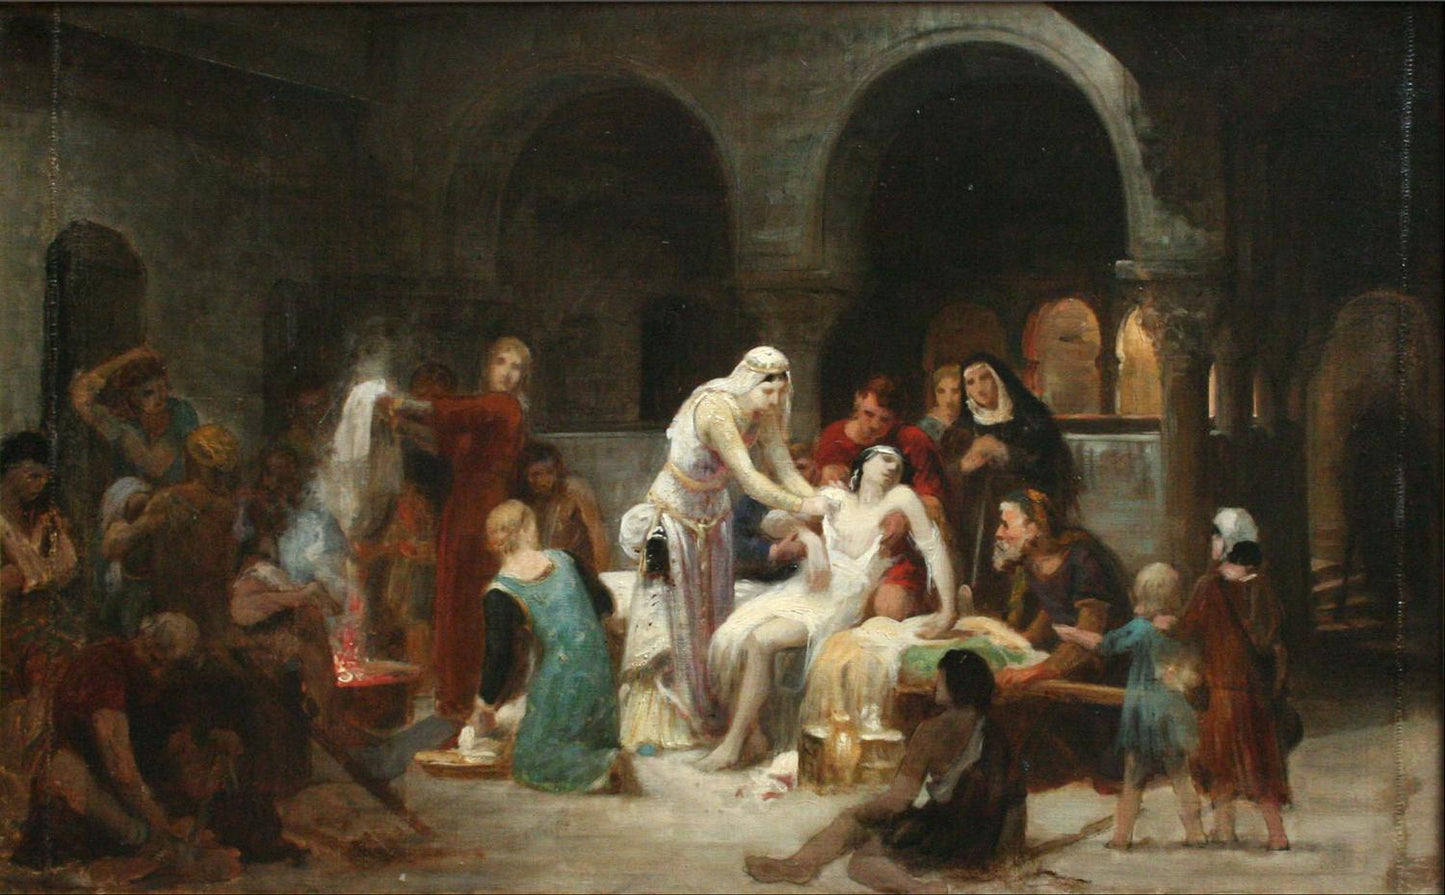 Saint Elizabeth of Hungary Curing Sick, Pierre Auguste Cot